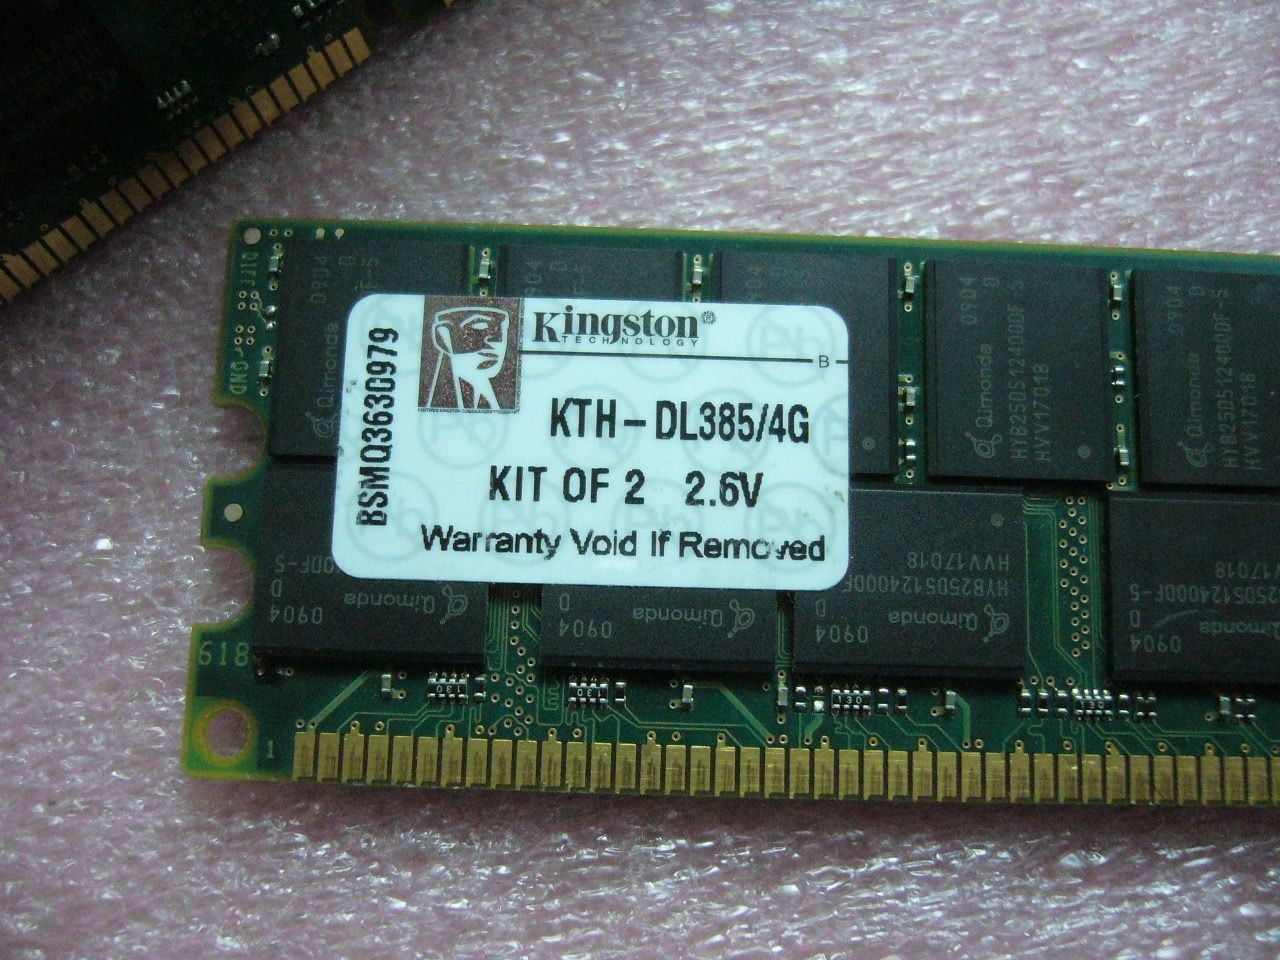 QTY 1x 2GB Module Kingston KTH-DL385/4G PC-3200R ECC Registered Server memory - Click Image to Close